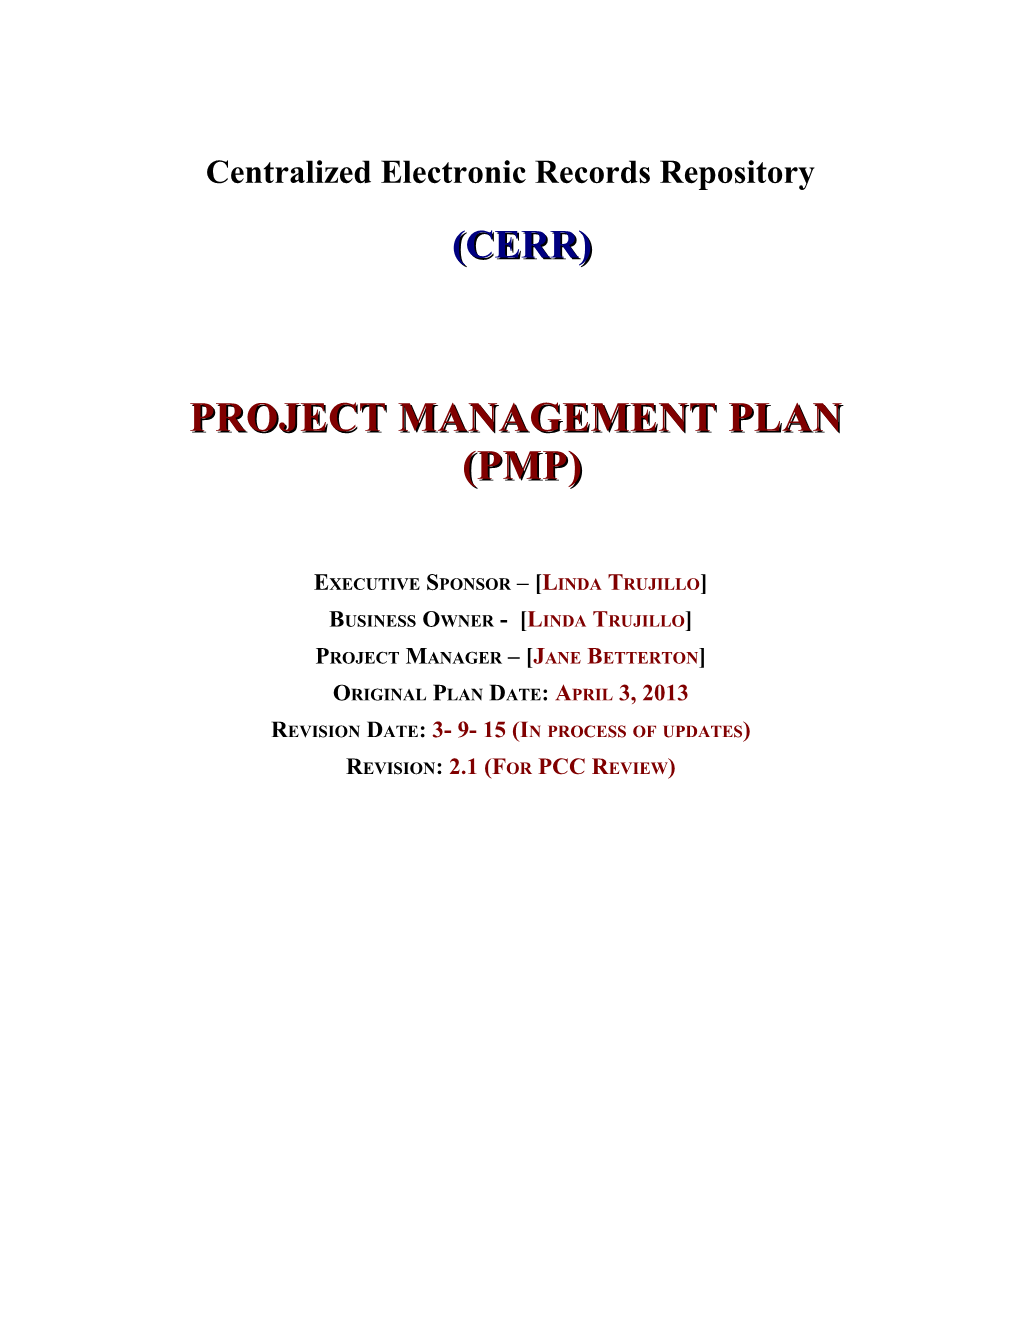 Project Management Plan for SRCA CERR Project